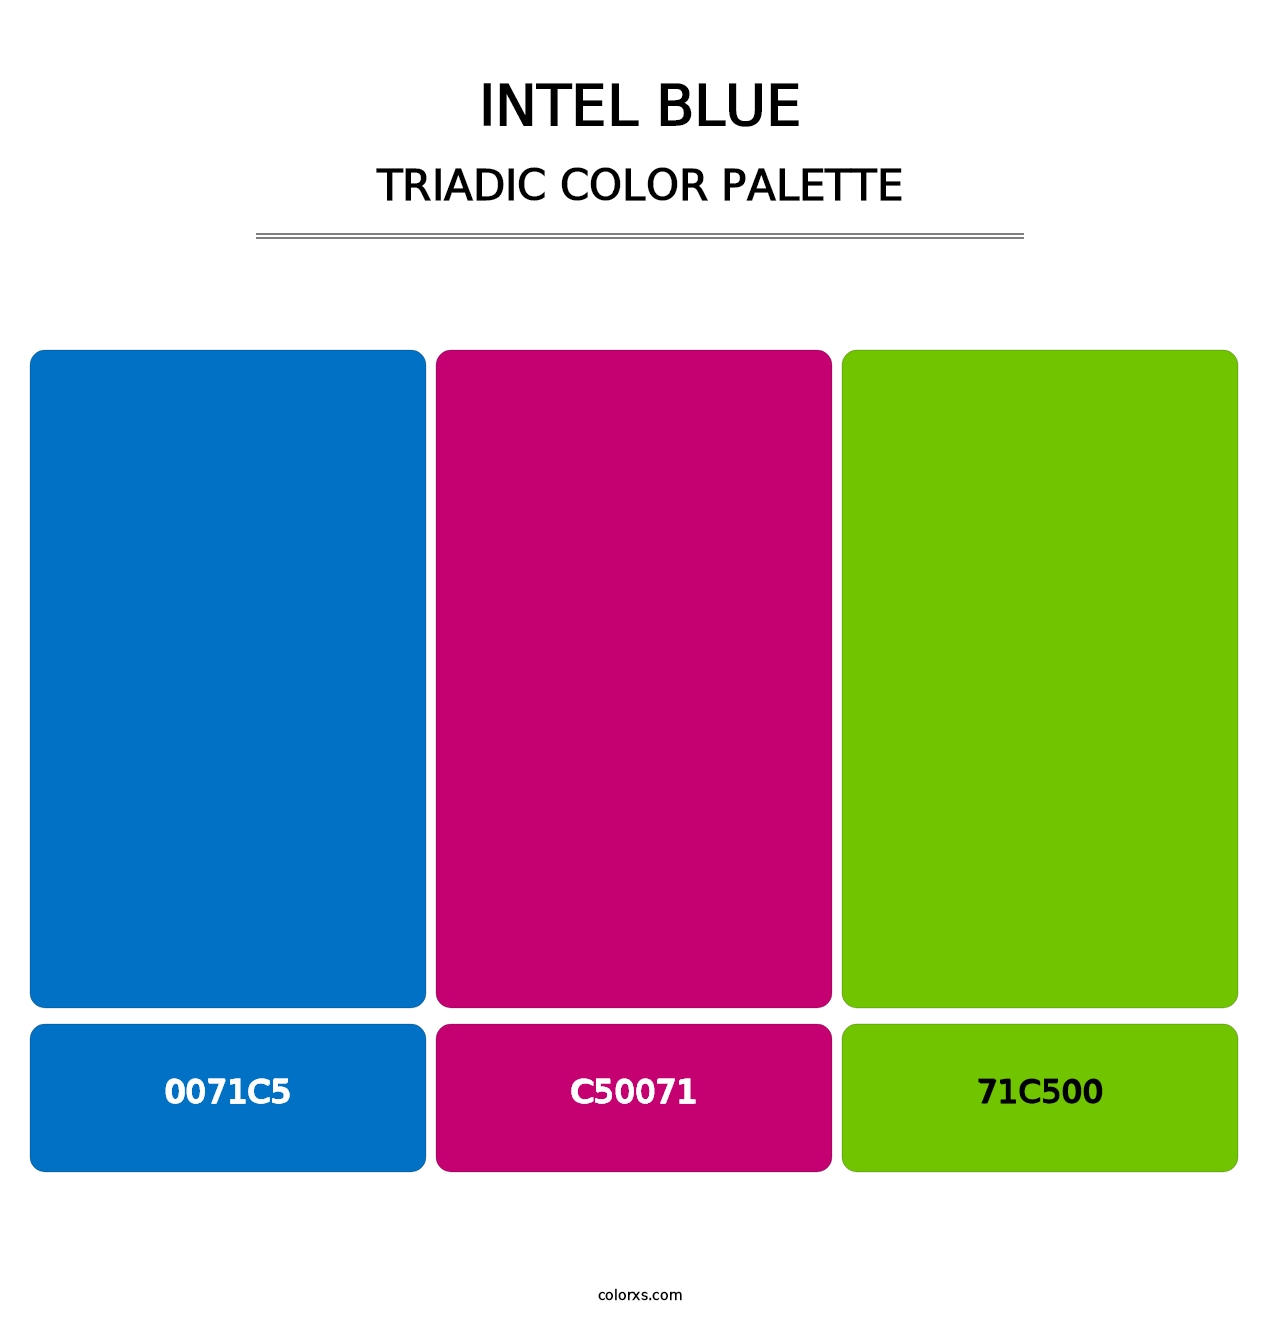 Intel Blue - Triadic Color Palette